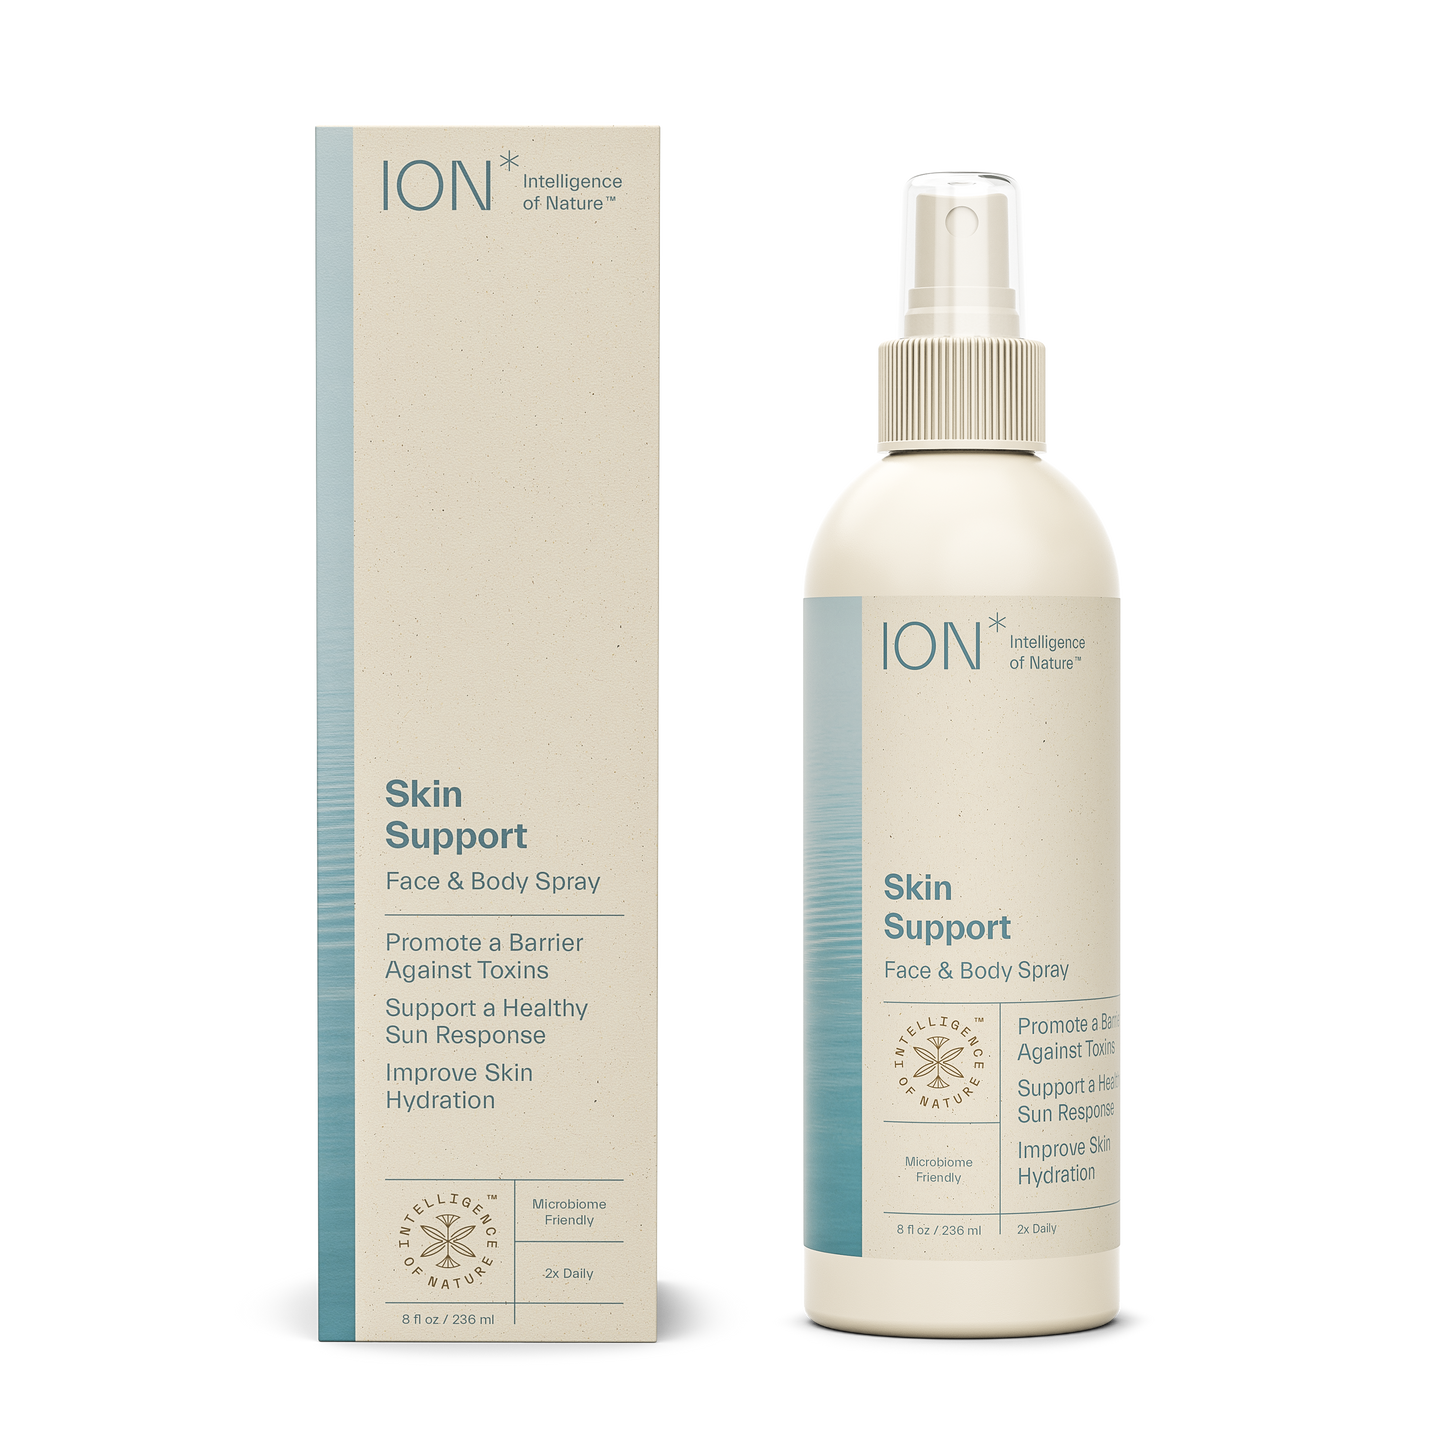 ION* Skin Support - 8oz spray